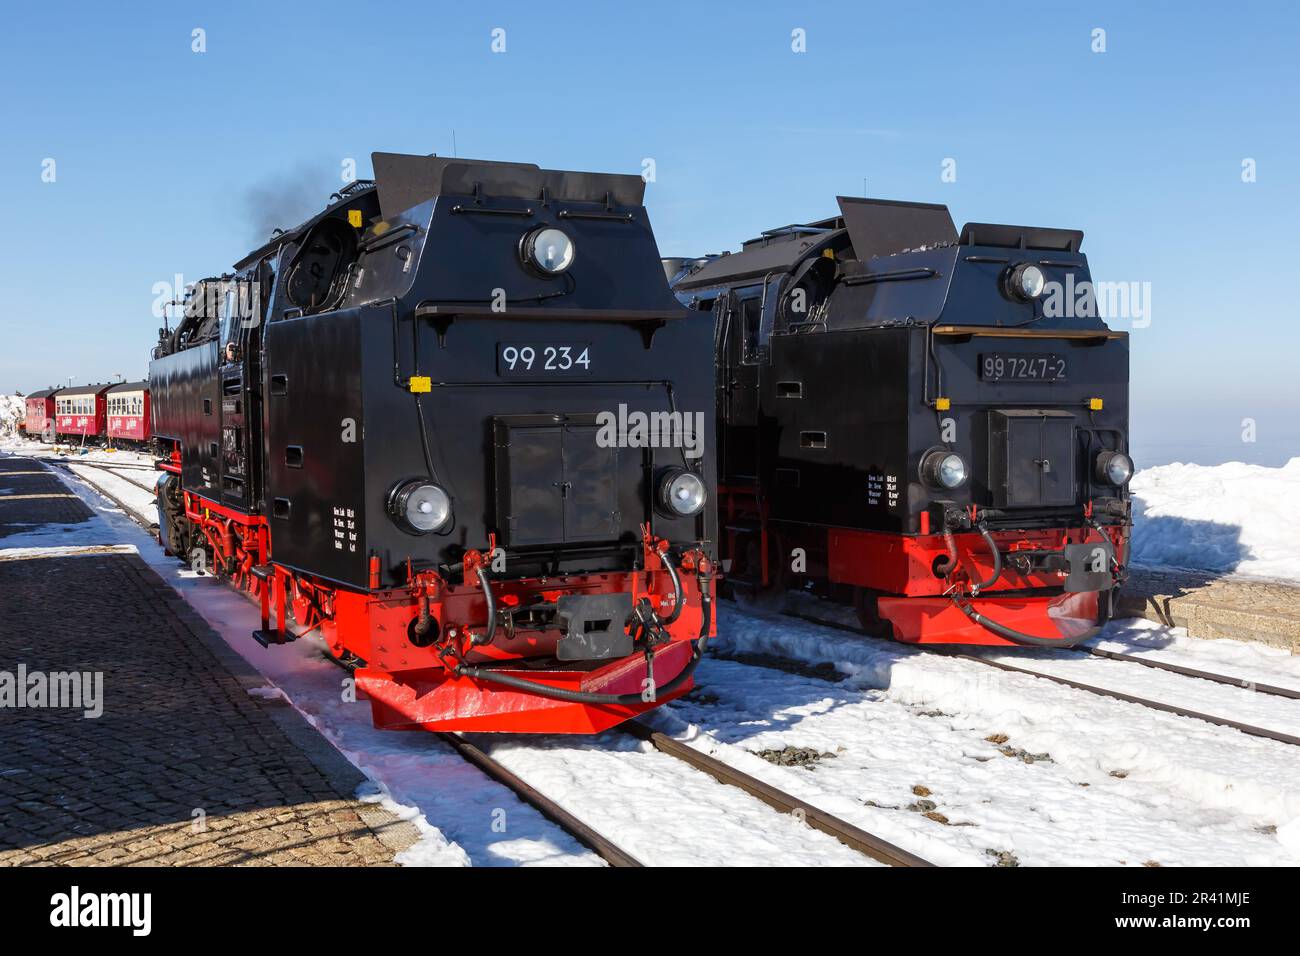 Locomotive dei treni a vapore della ferrovia a vapore Brockenbahn sul Brocken in Germania Foto Stock